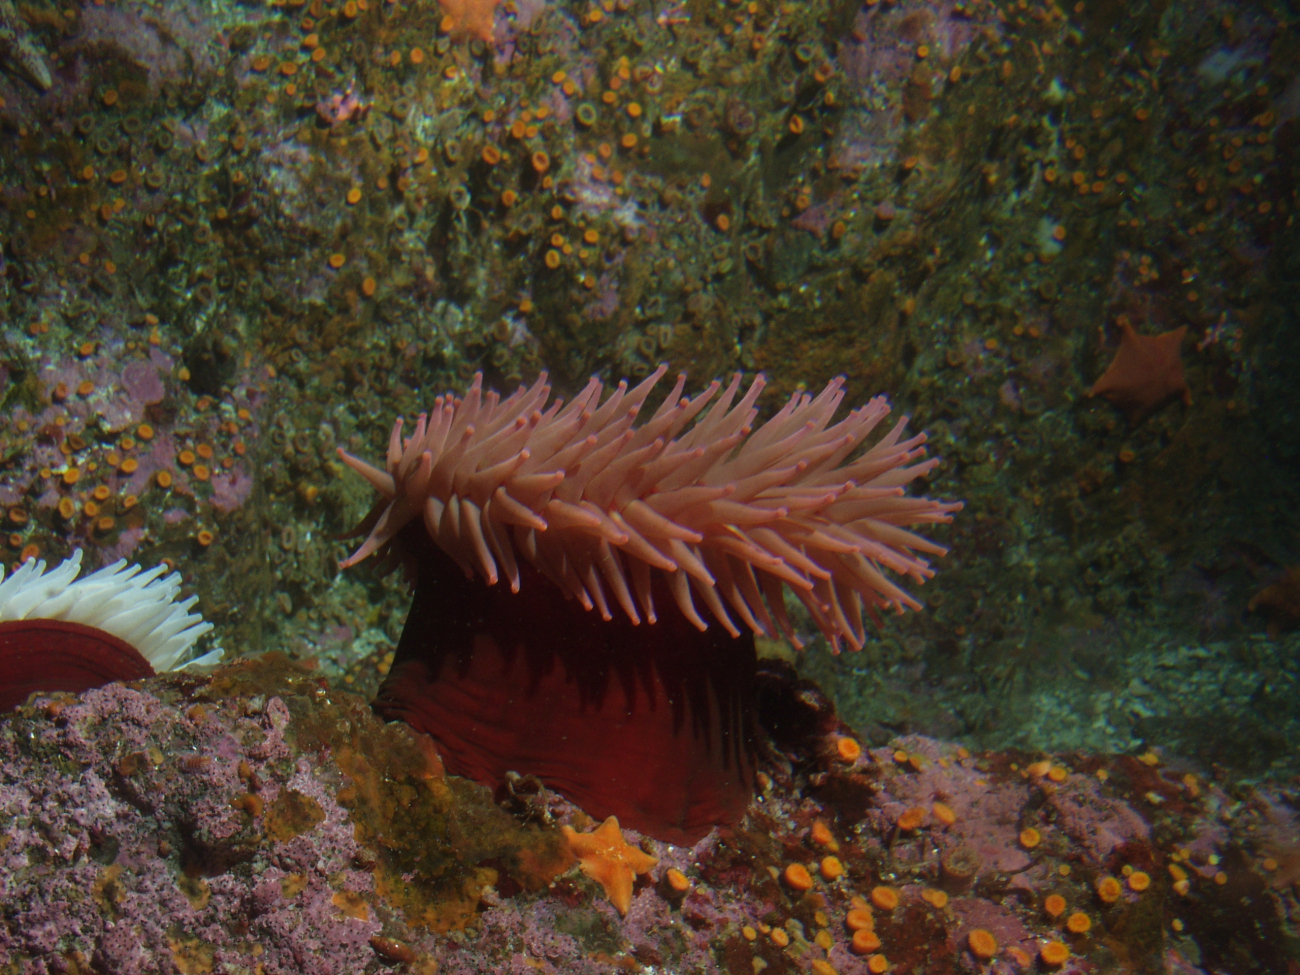 Fish eating anemone (Urticina piscivora) on boulder in rocky habitat